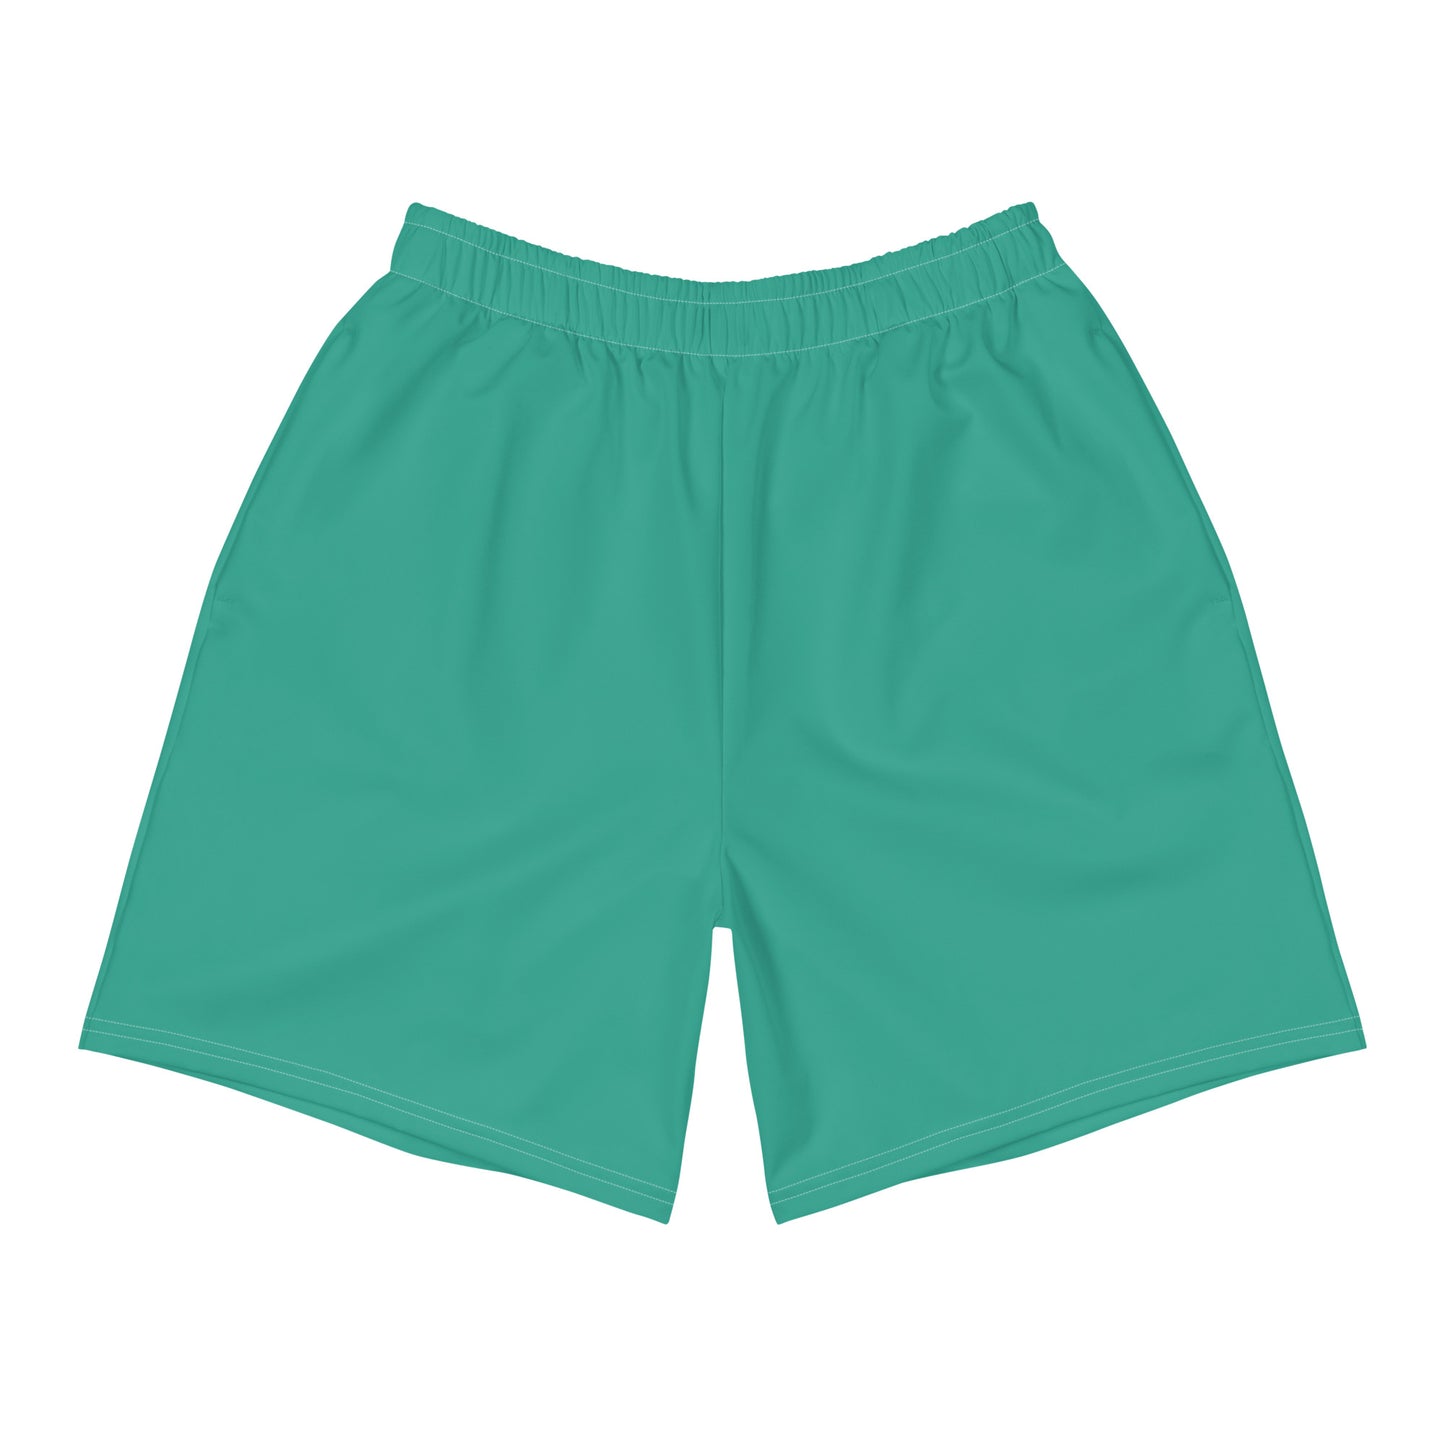 Jade - Sustainably Made Men's Short